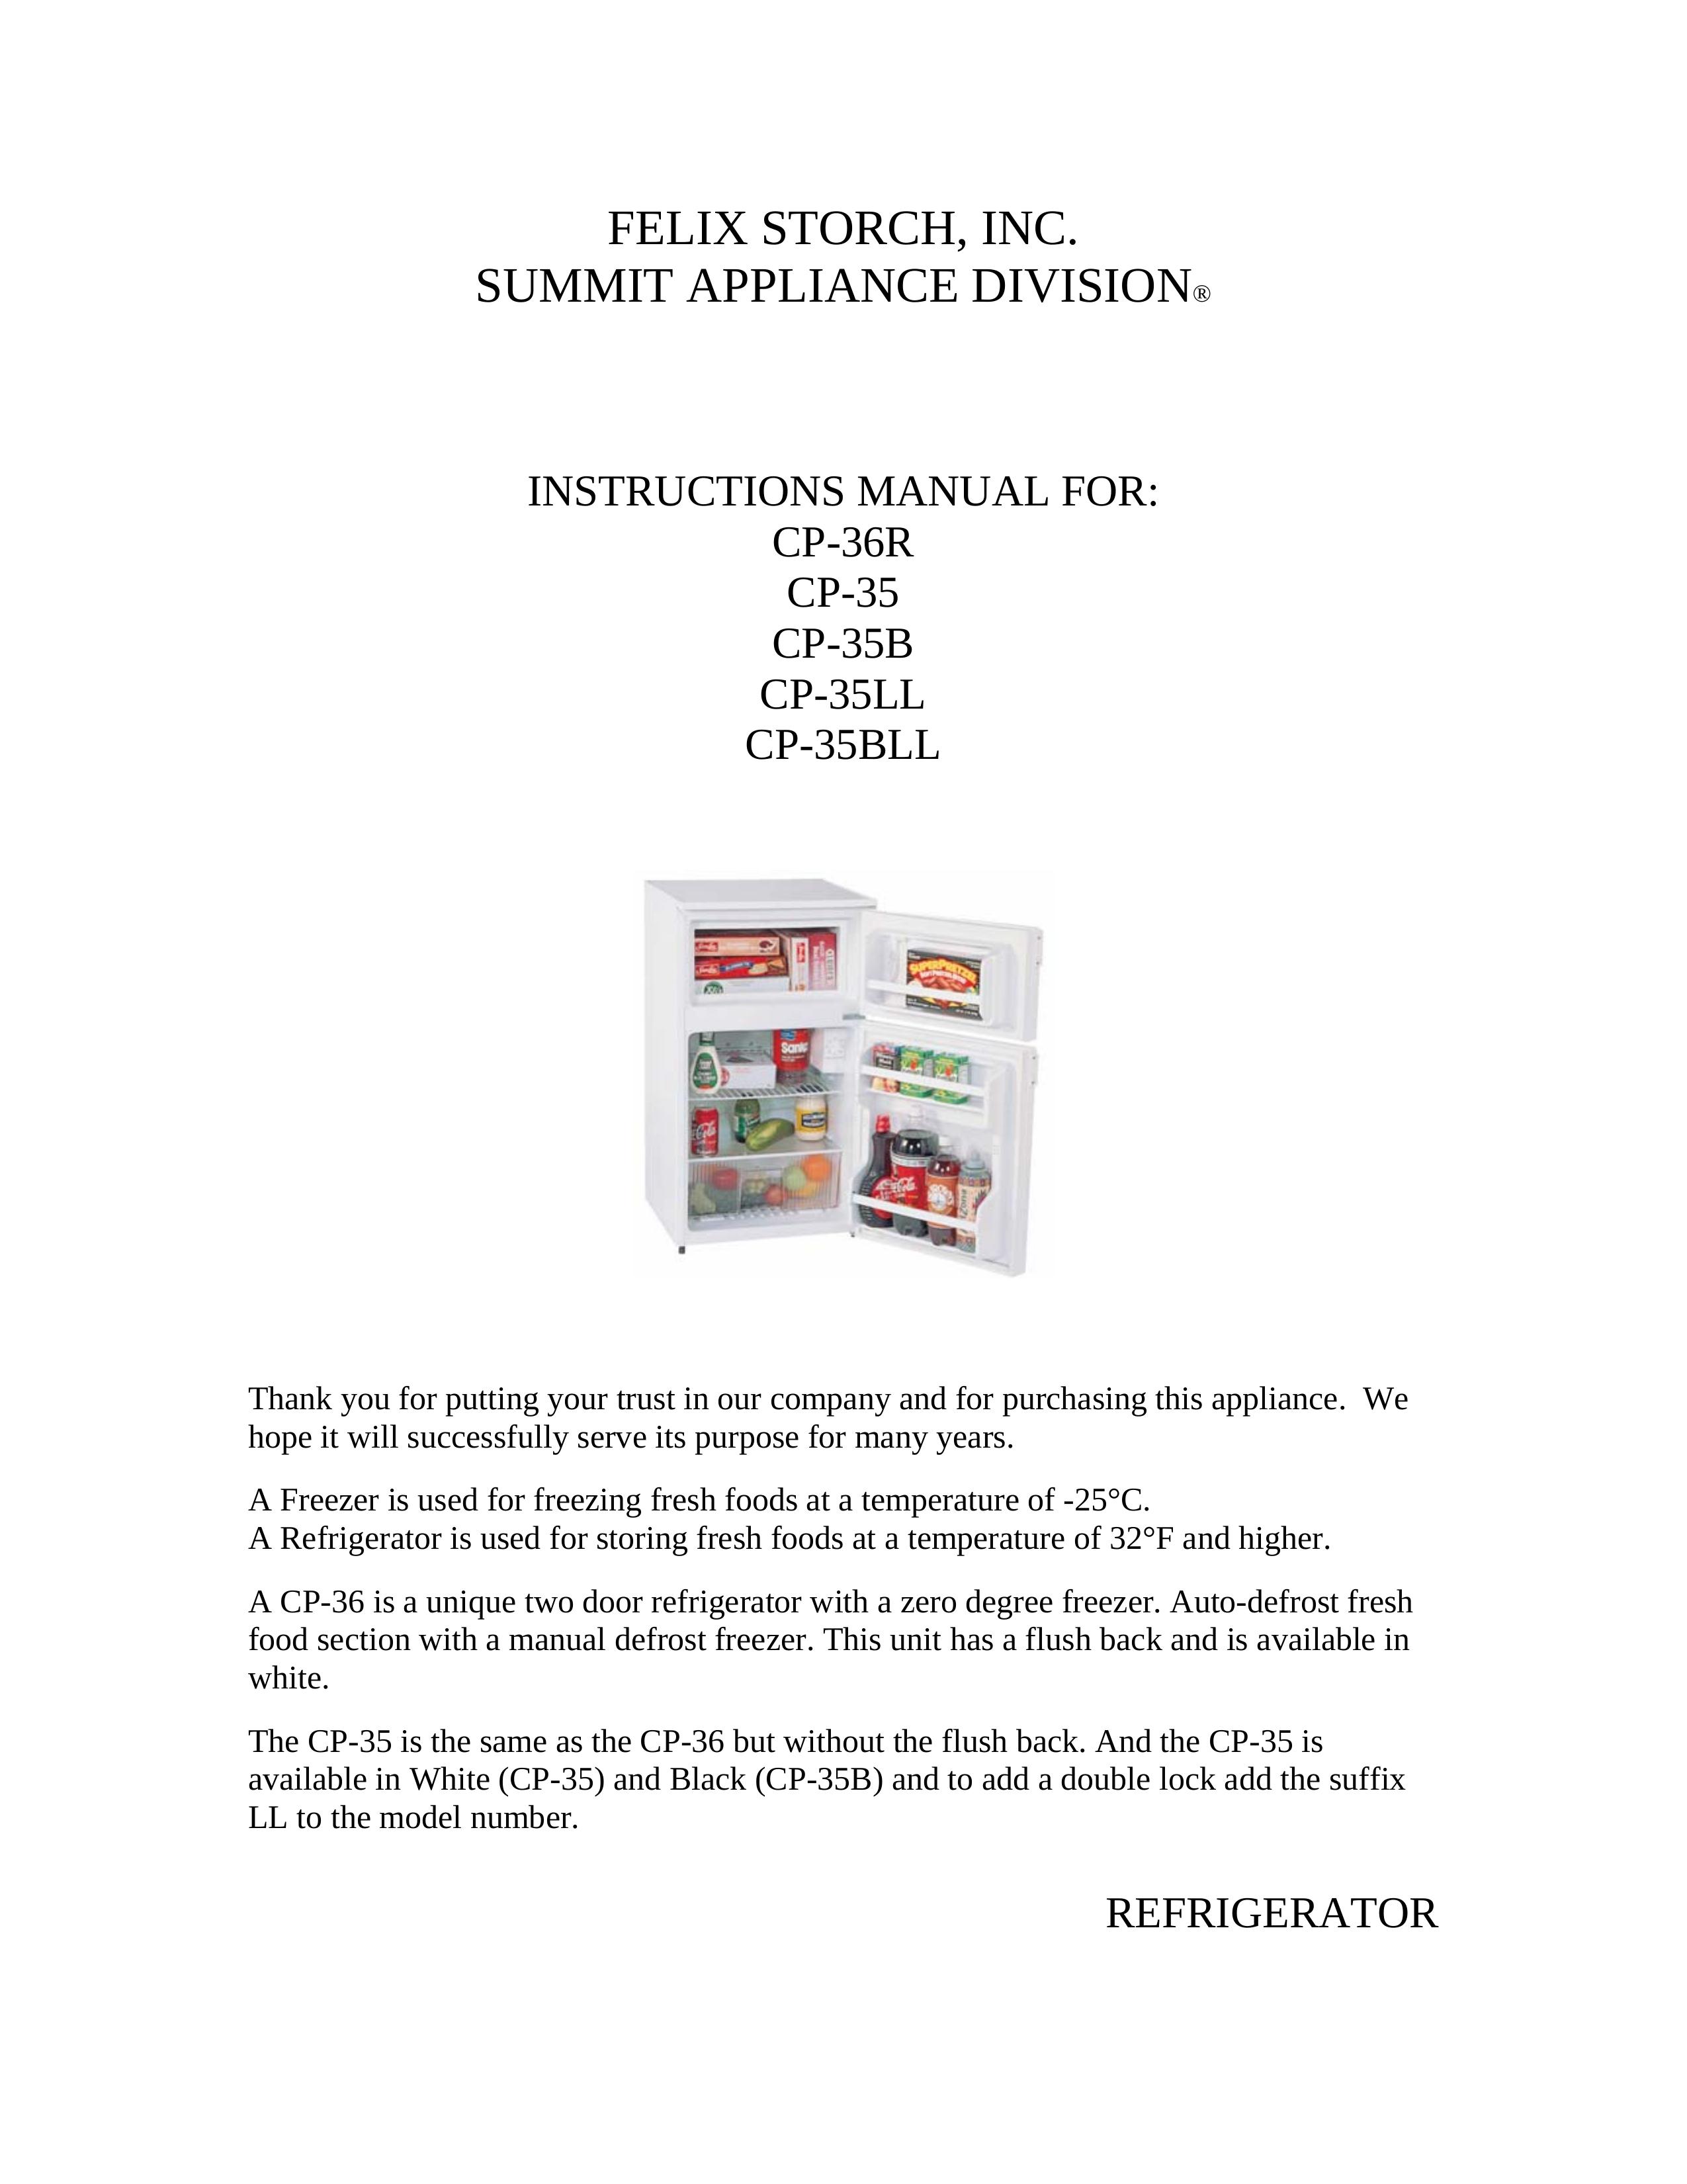 Summit CP-35LL Refrigerator User Manual